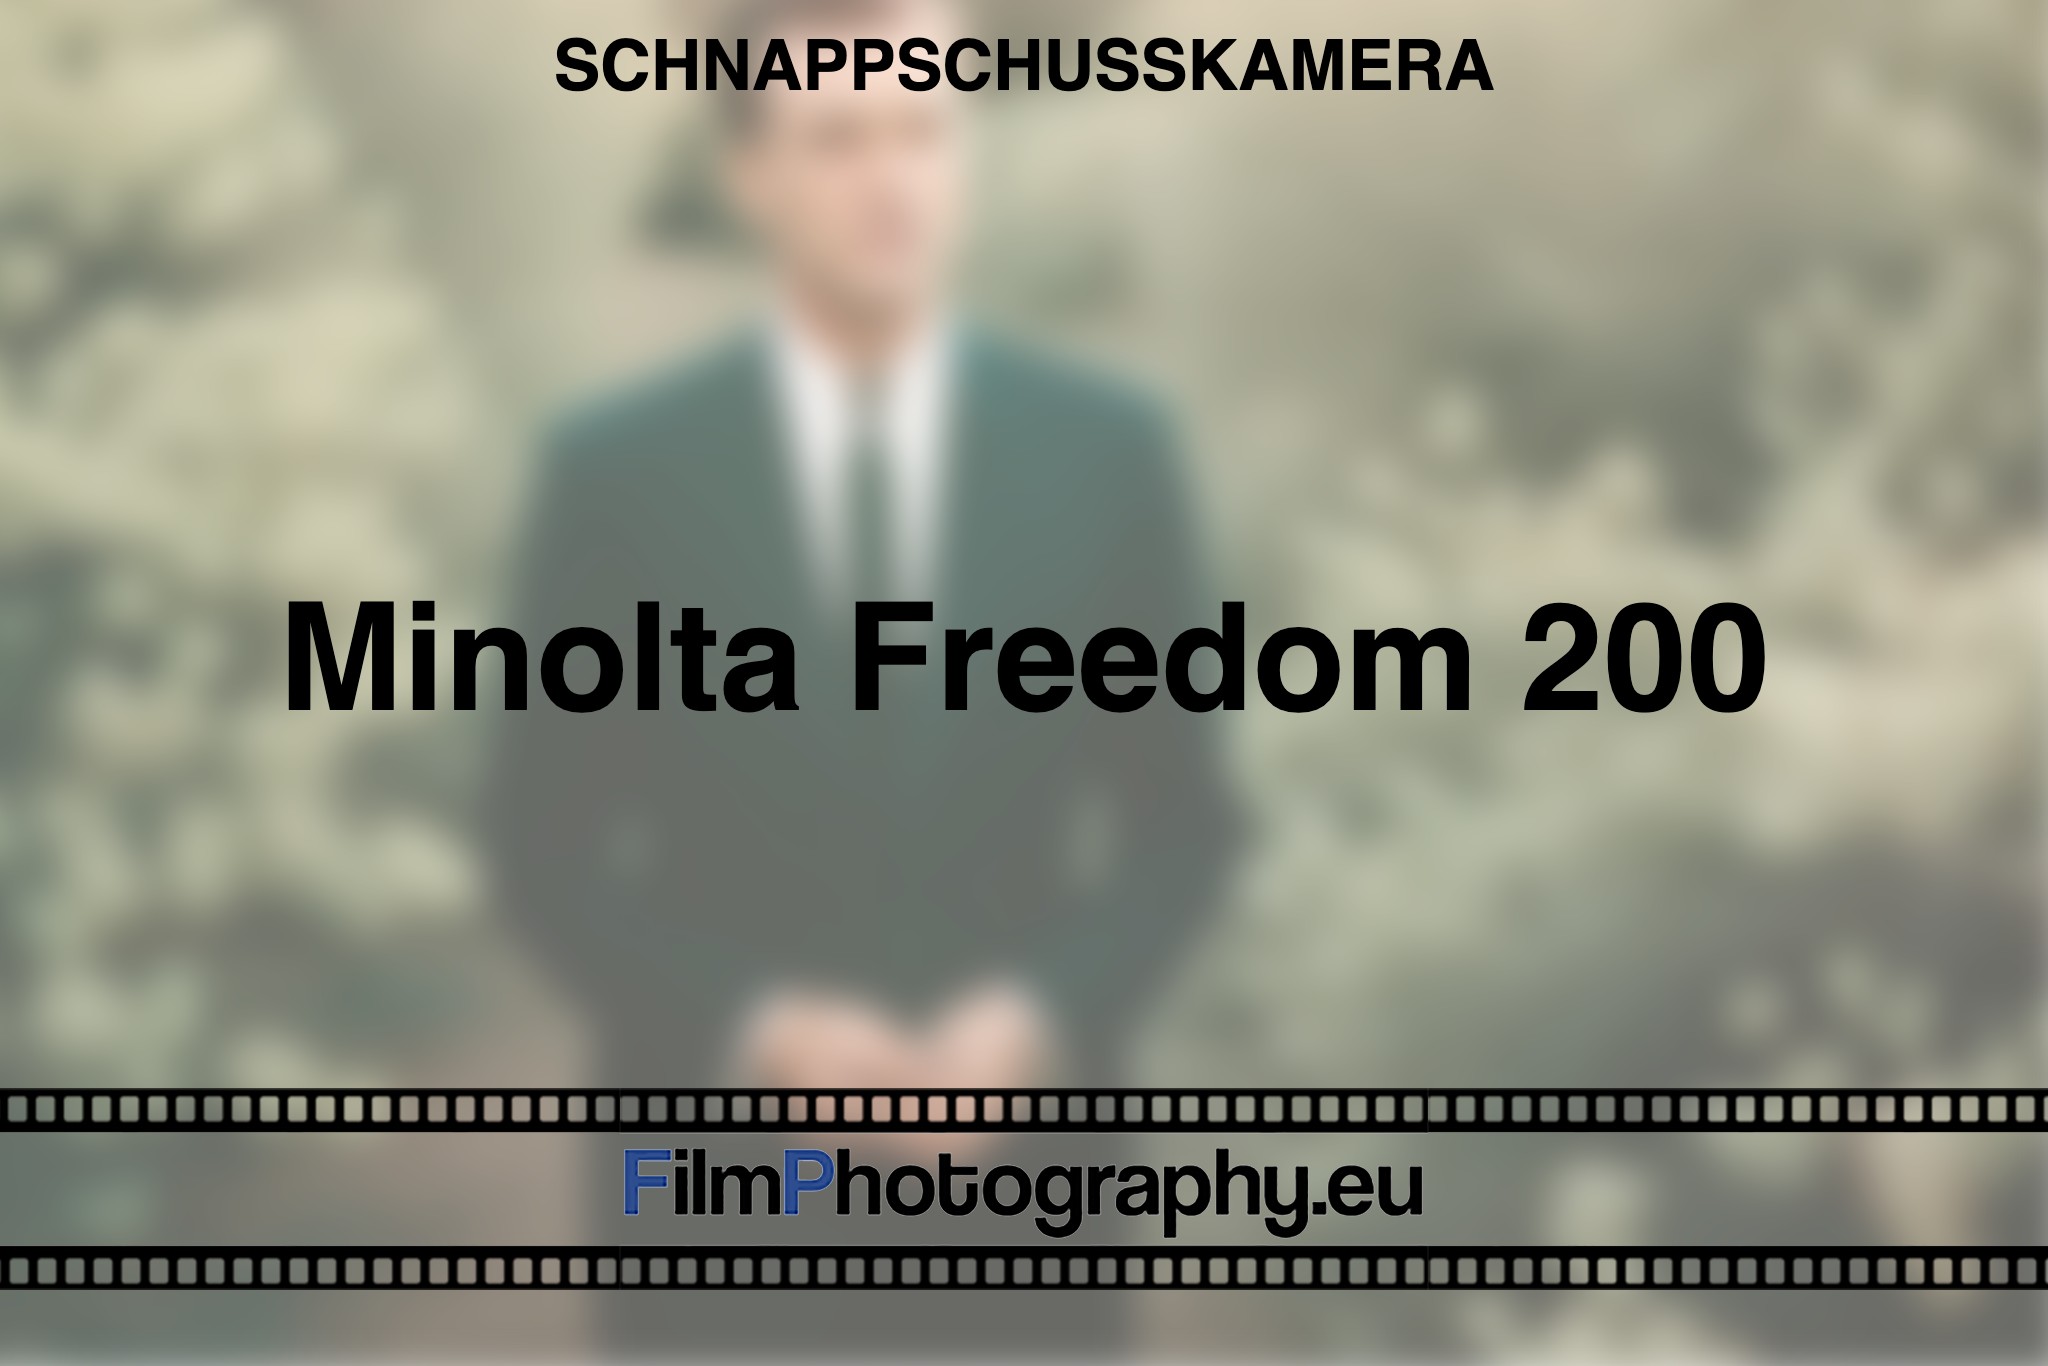 minolta-freedom-200-schnappschusskamera-bnv